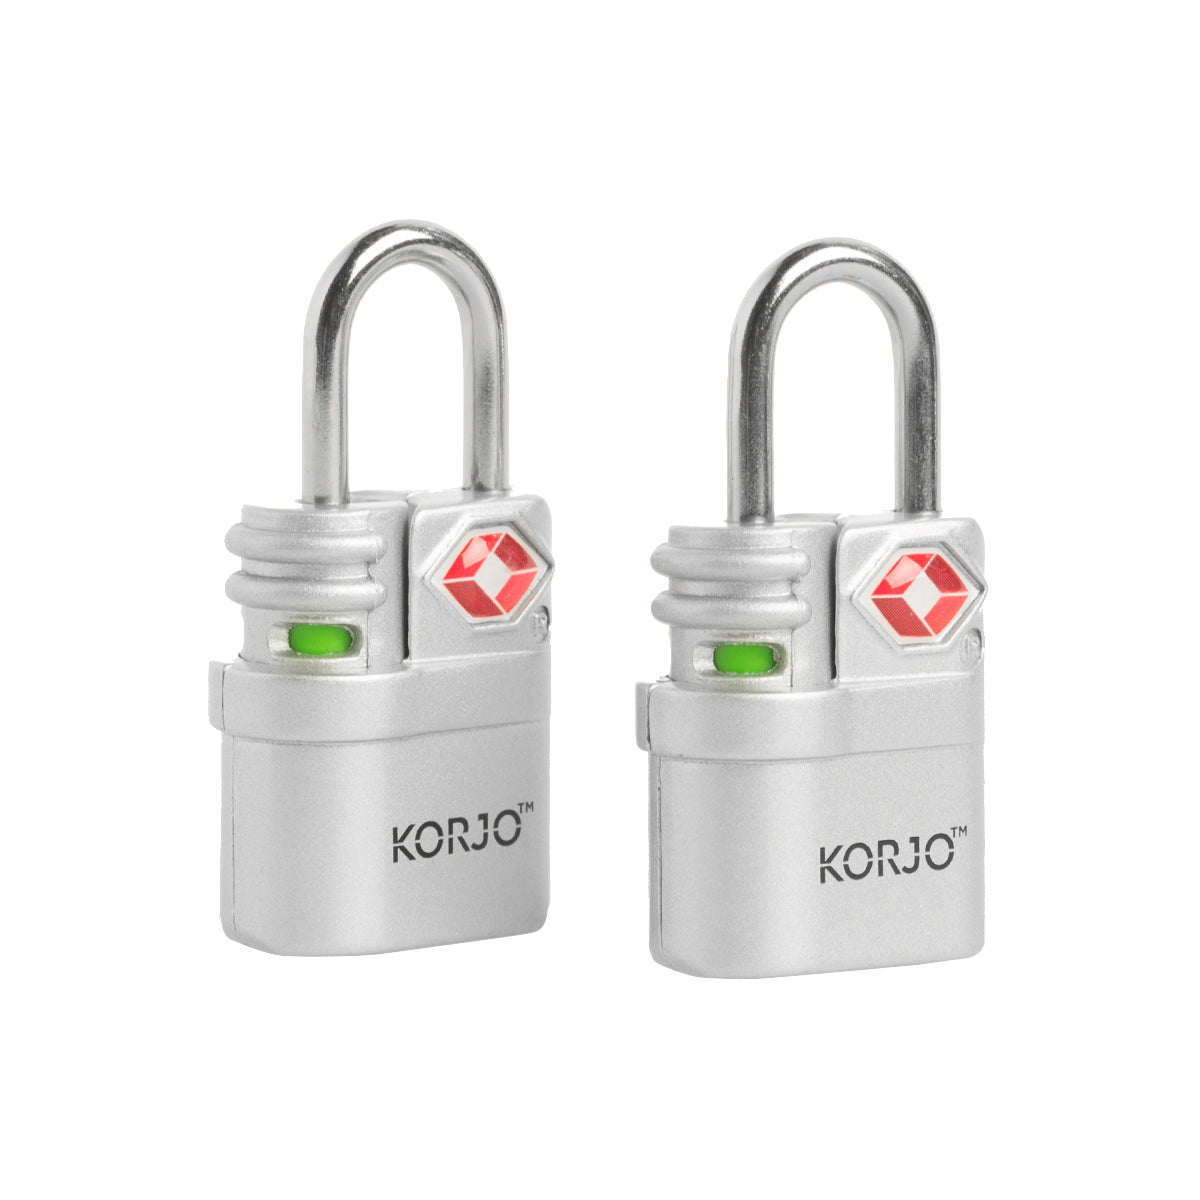 Korjo TSA Keyed Locks With Indicator Duo Pack